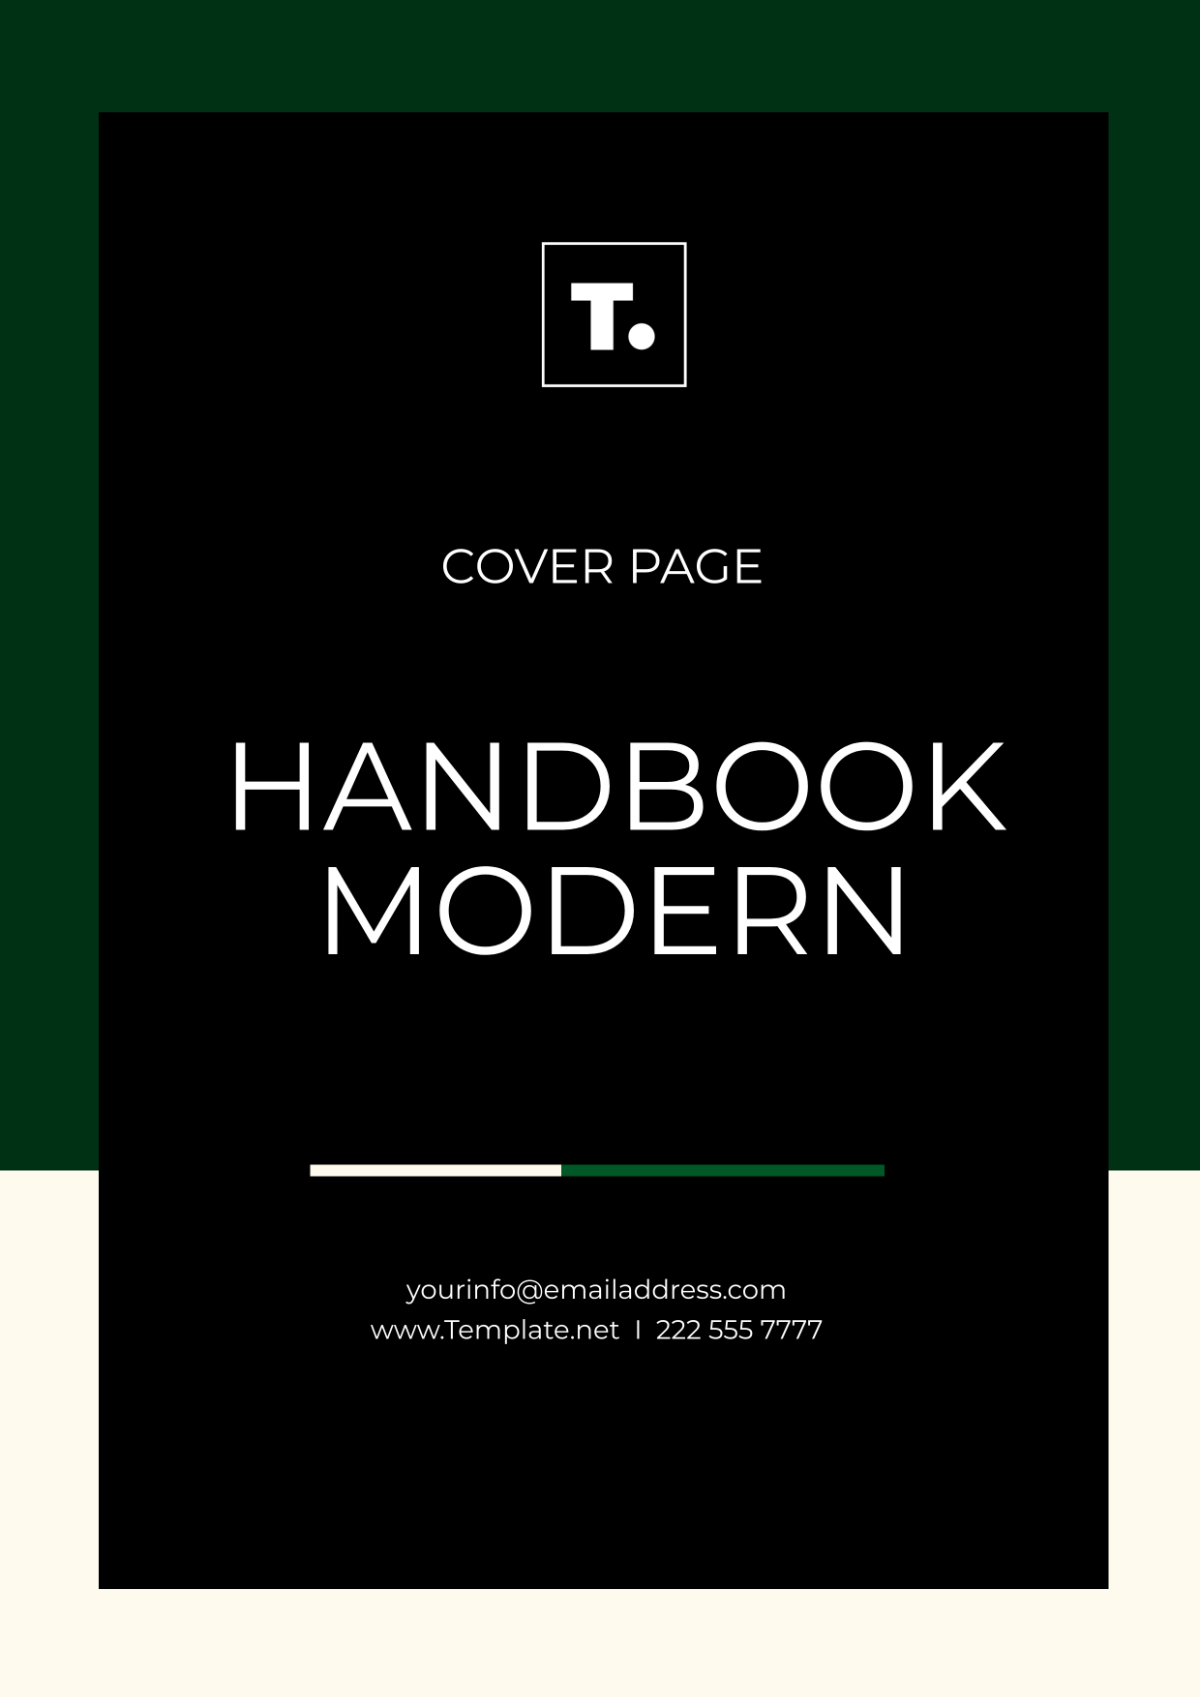 Handbook Modern Cover Page